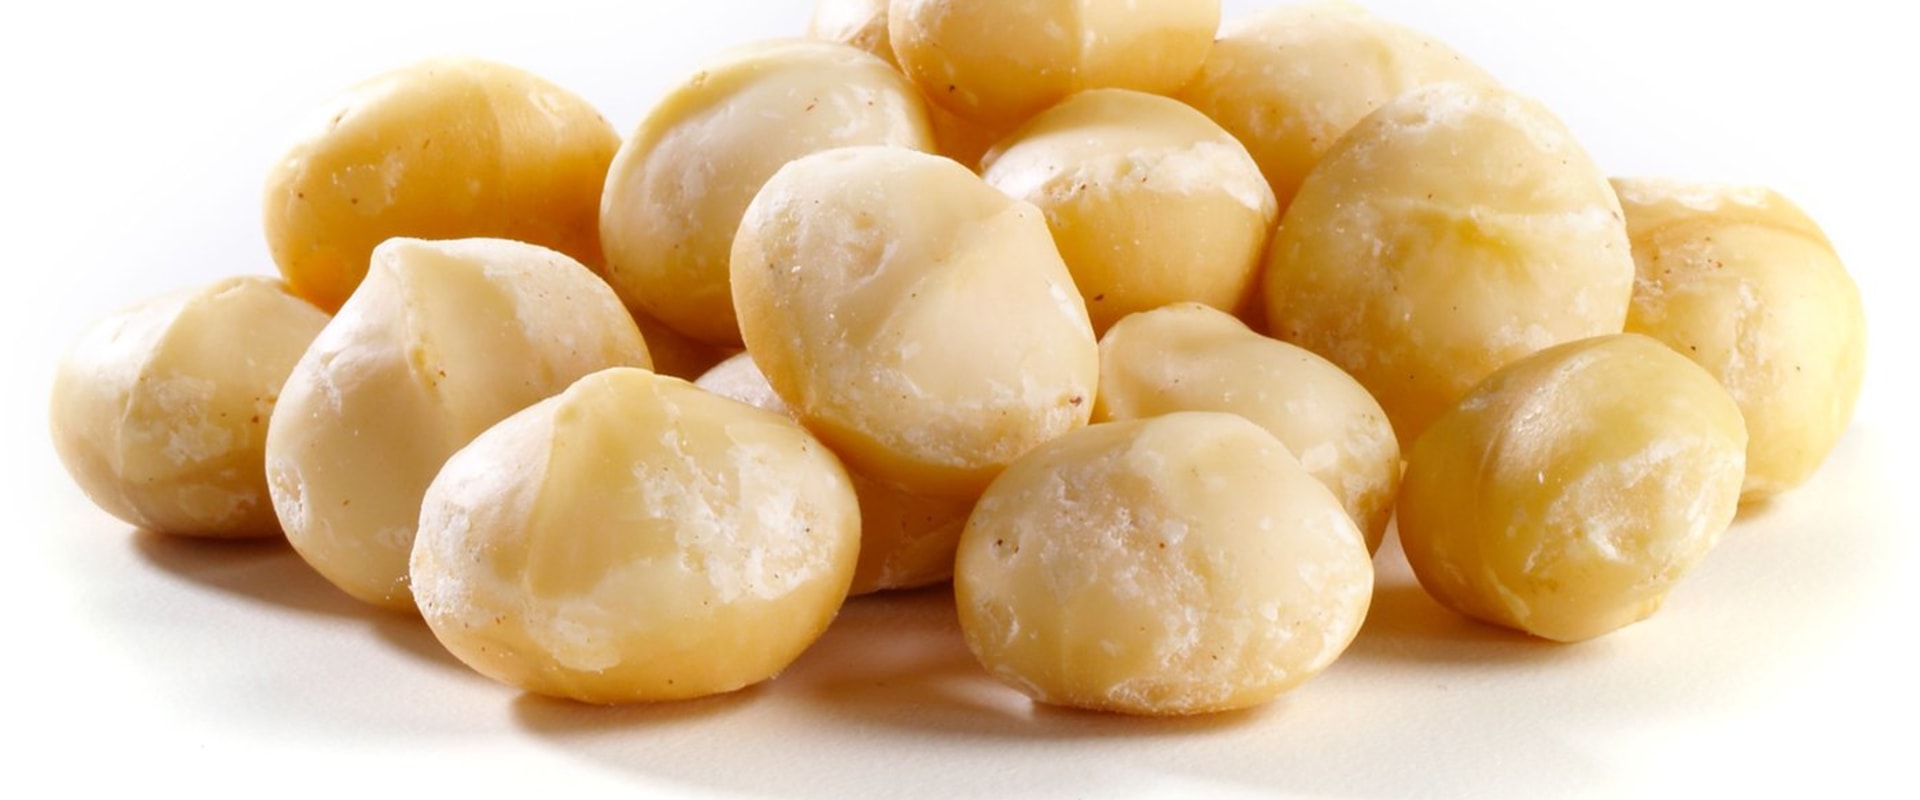 Do raw macadamia nuts taste good?